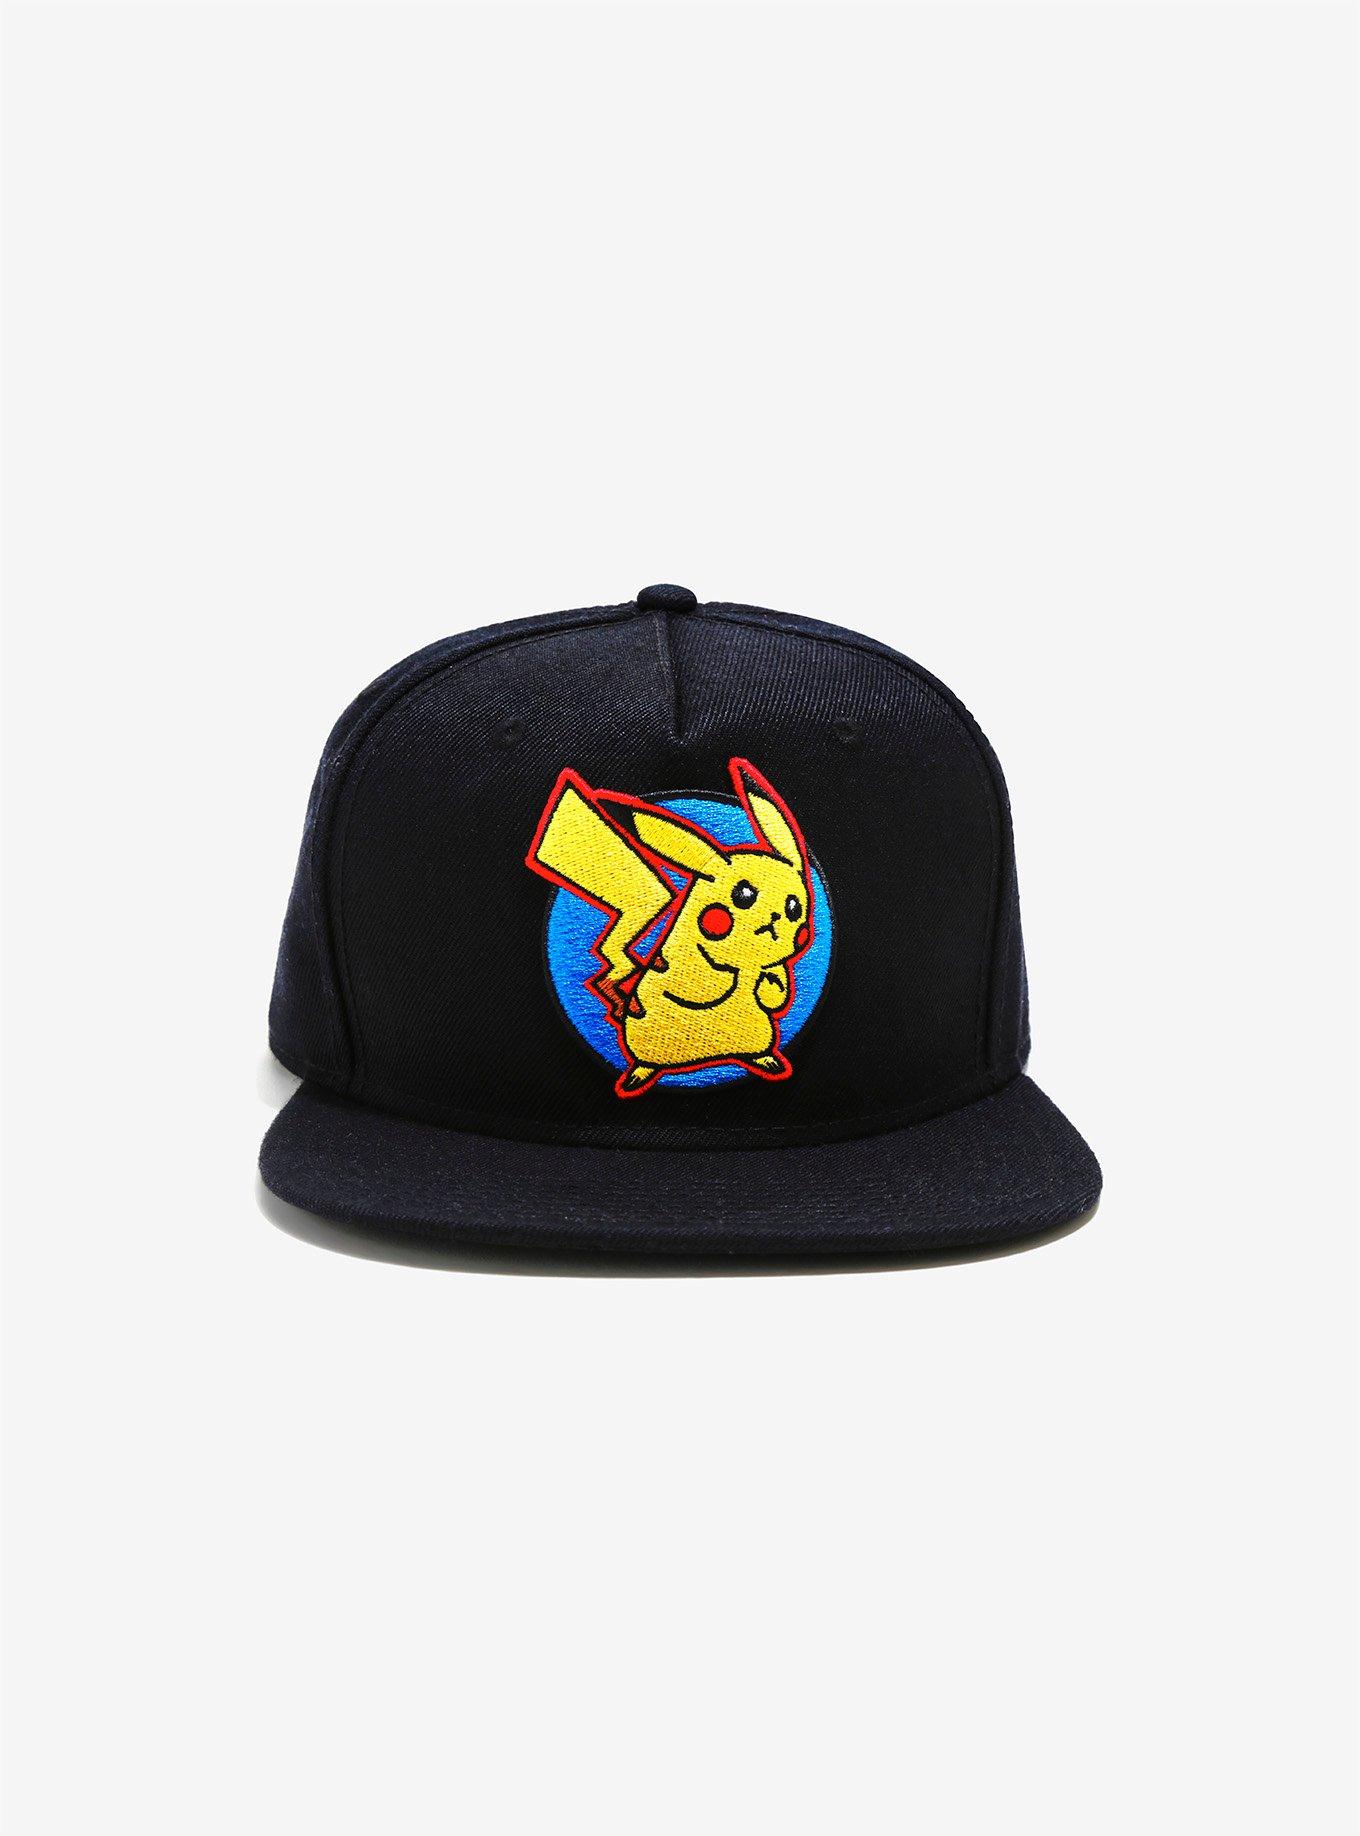 Pokémon Pikachu Fighting Pose Snapback Hat, , hi-res